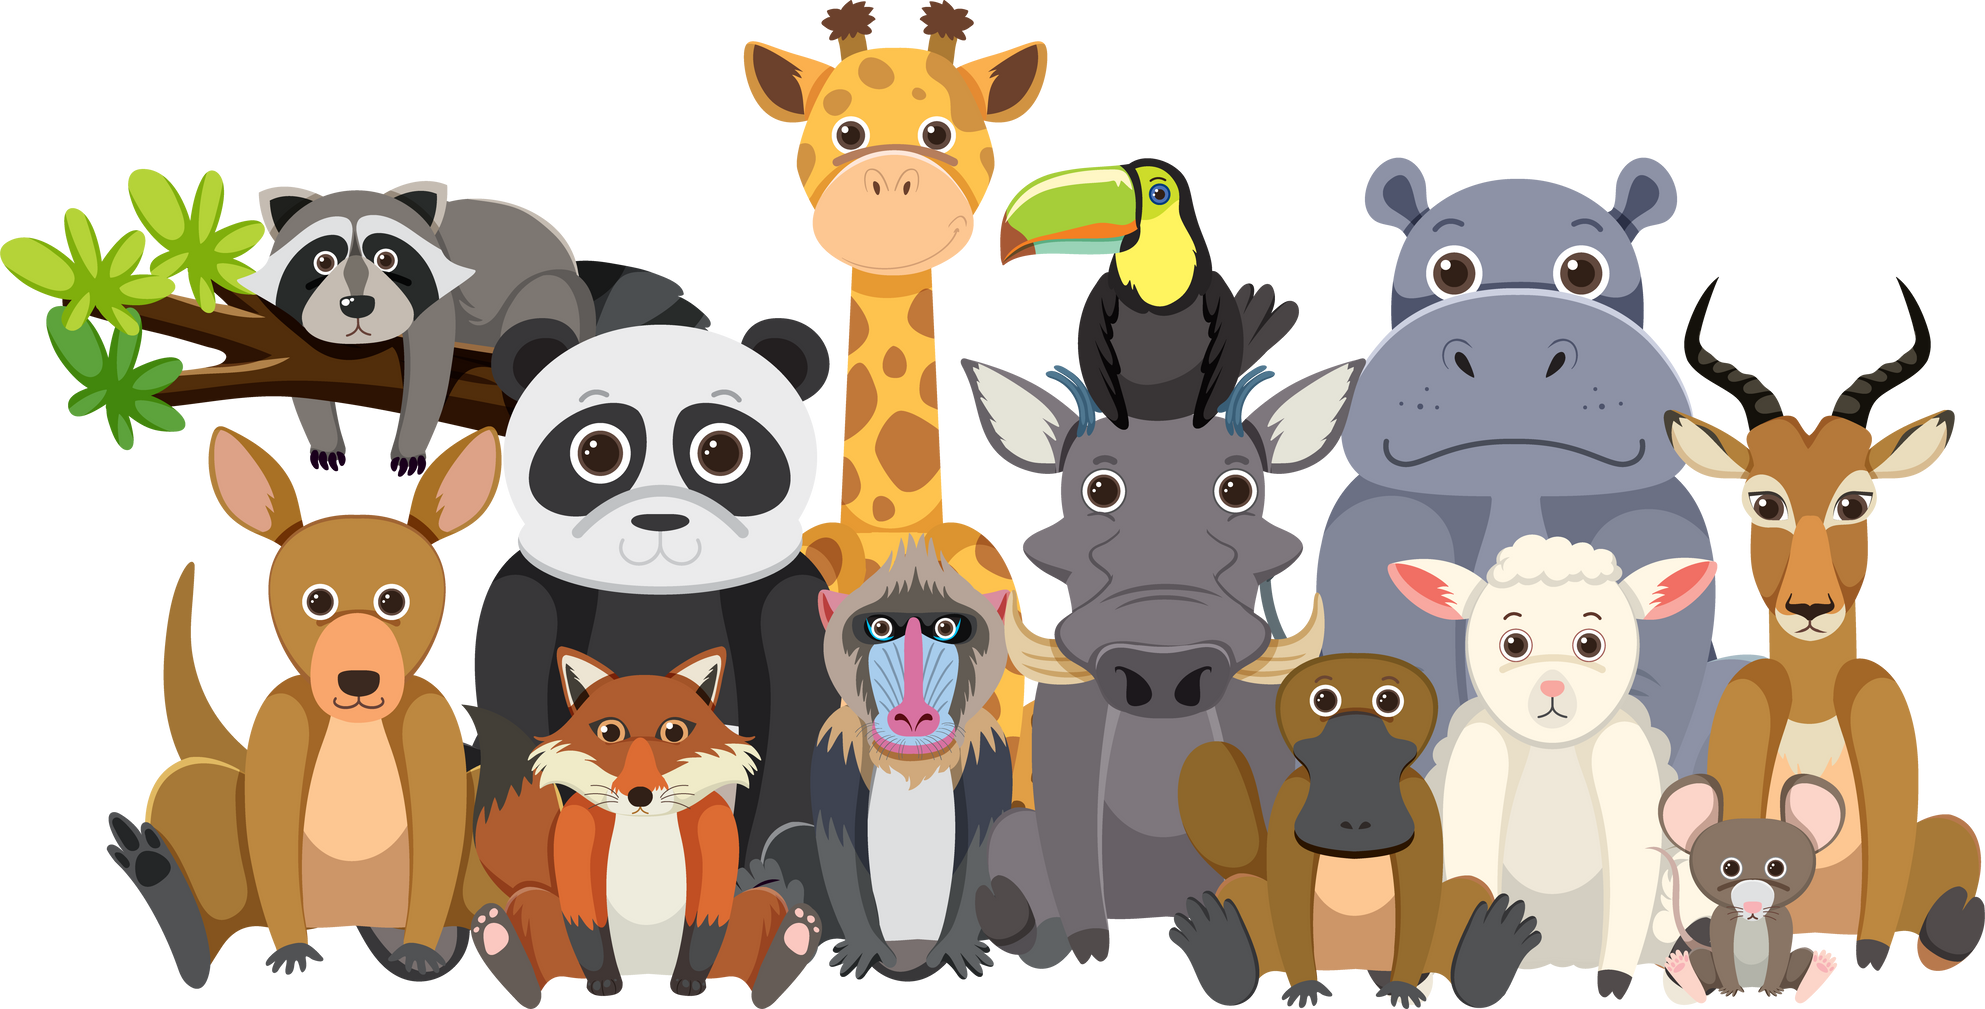 Zoo Animals Group in Flat Cartoon Style